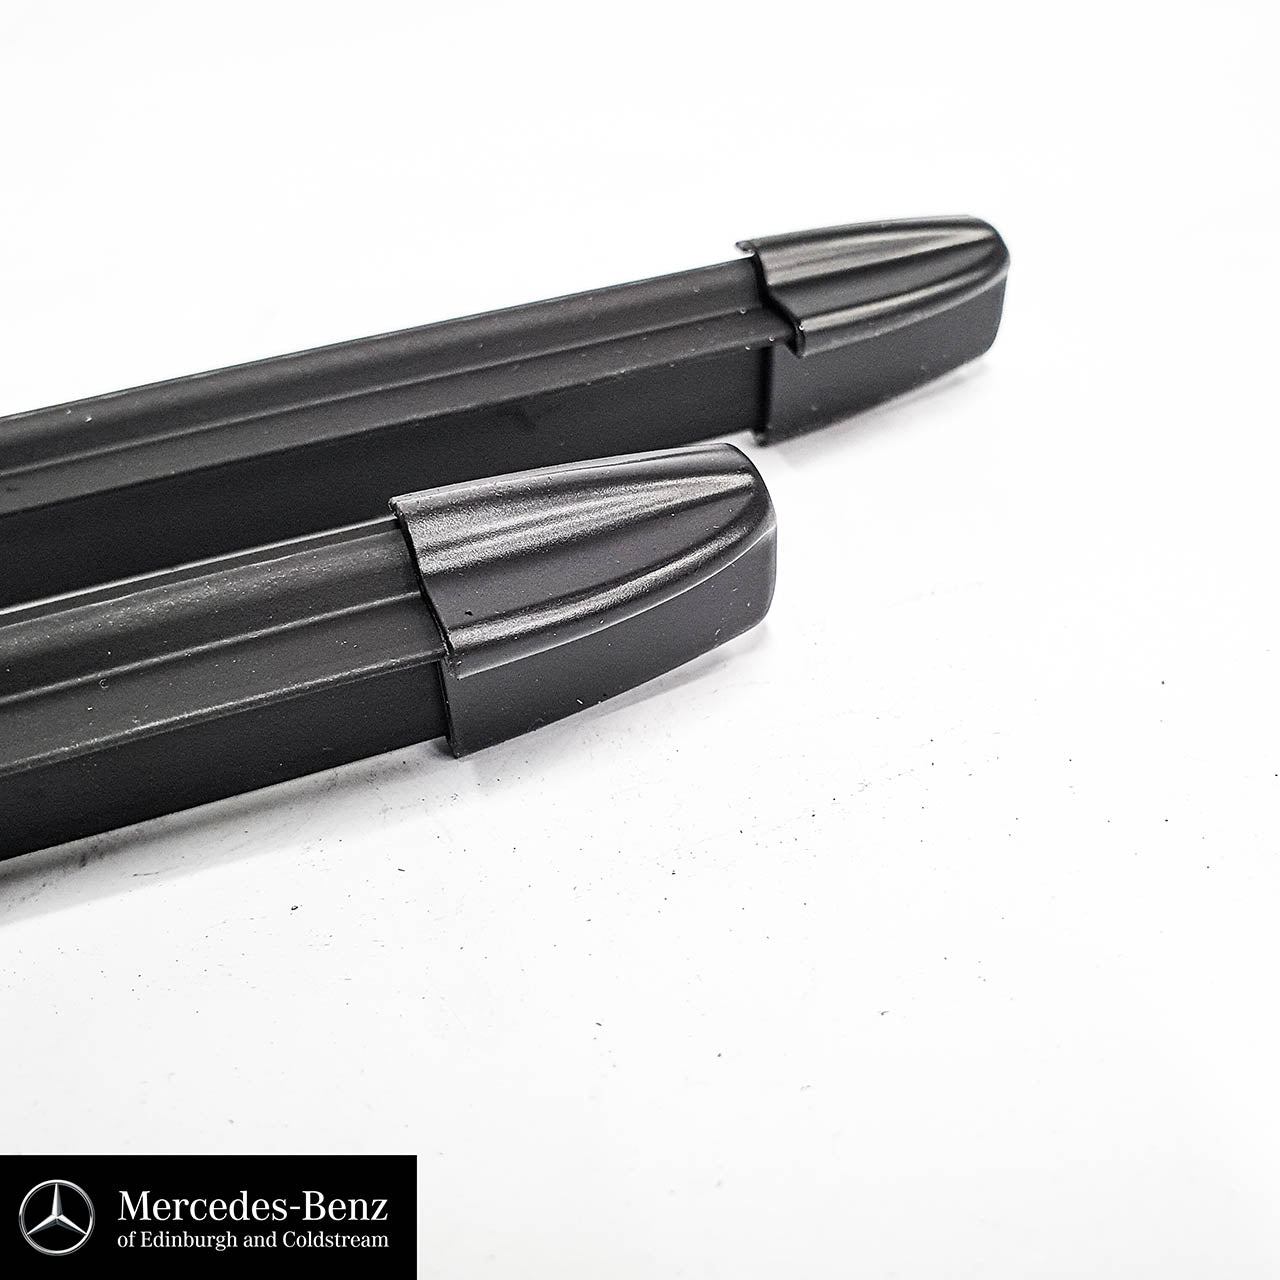 Mercedes-Benz E Class Cabrio Heated Front Wiper Blades